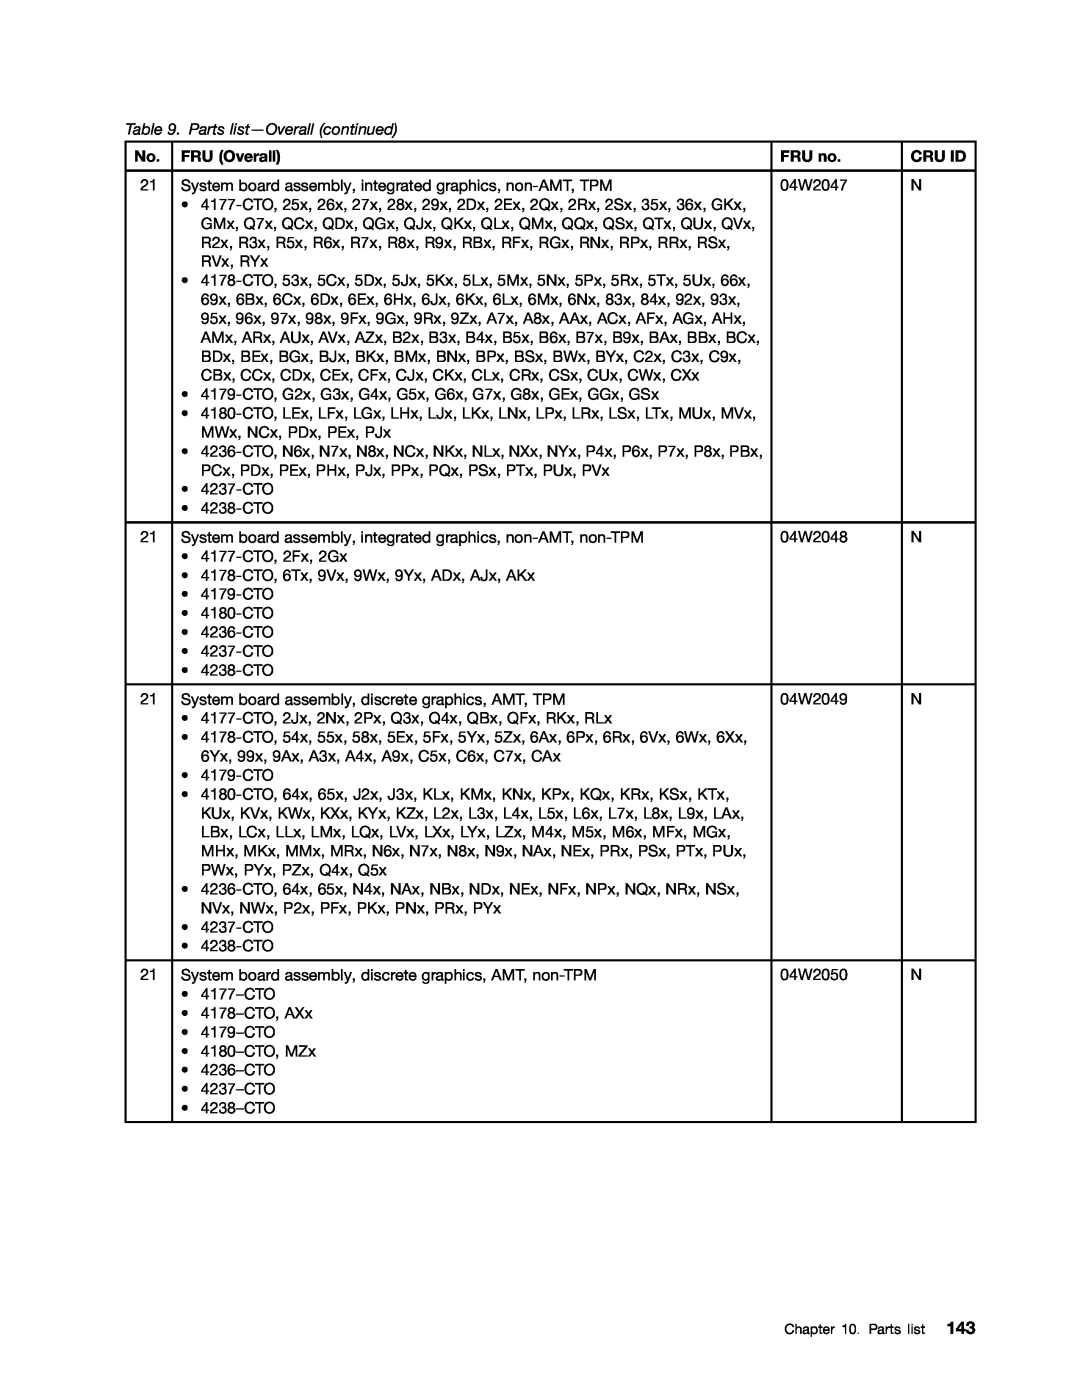 Lenovo T420i manual Parts list-Overall continued, FRU Overall, FRU no, Cru Id 